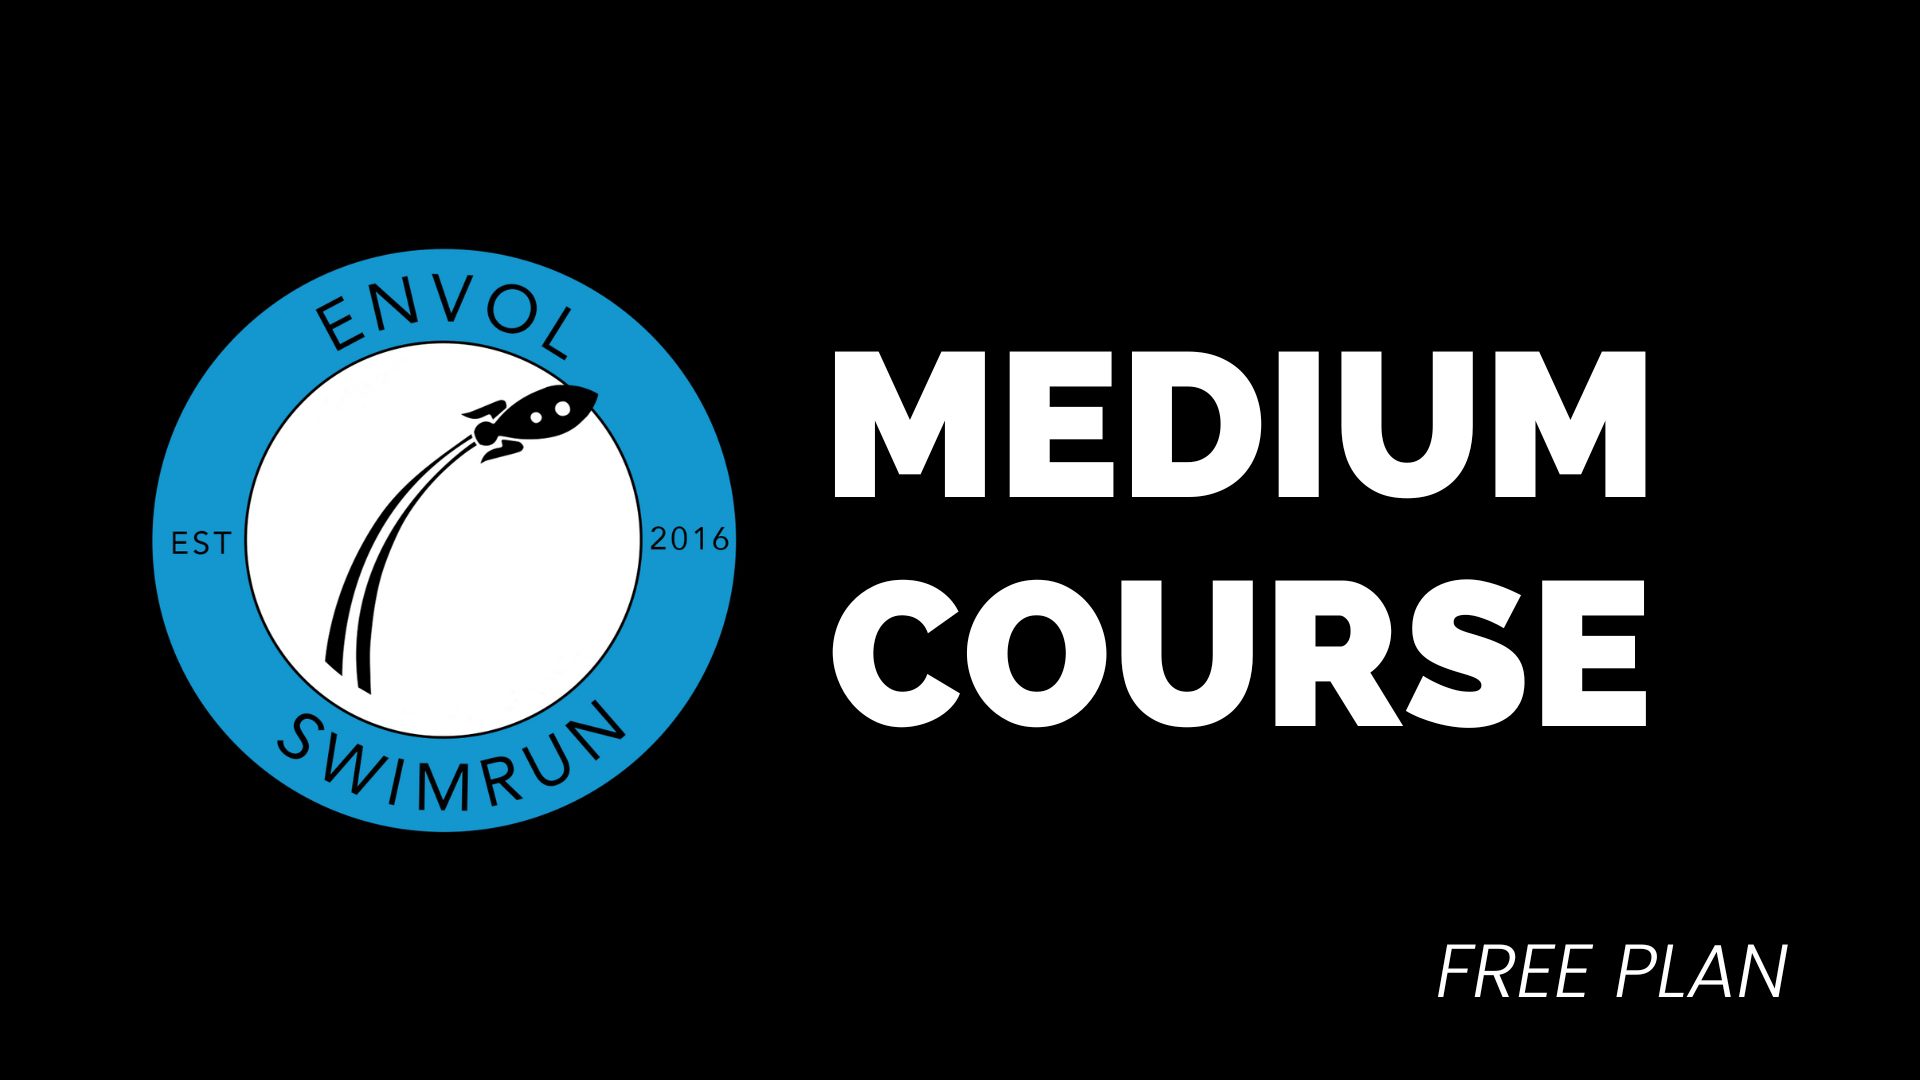 Medium Course Free Plan